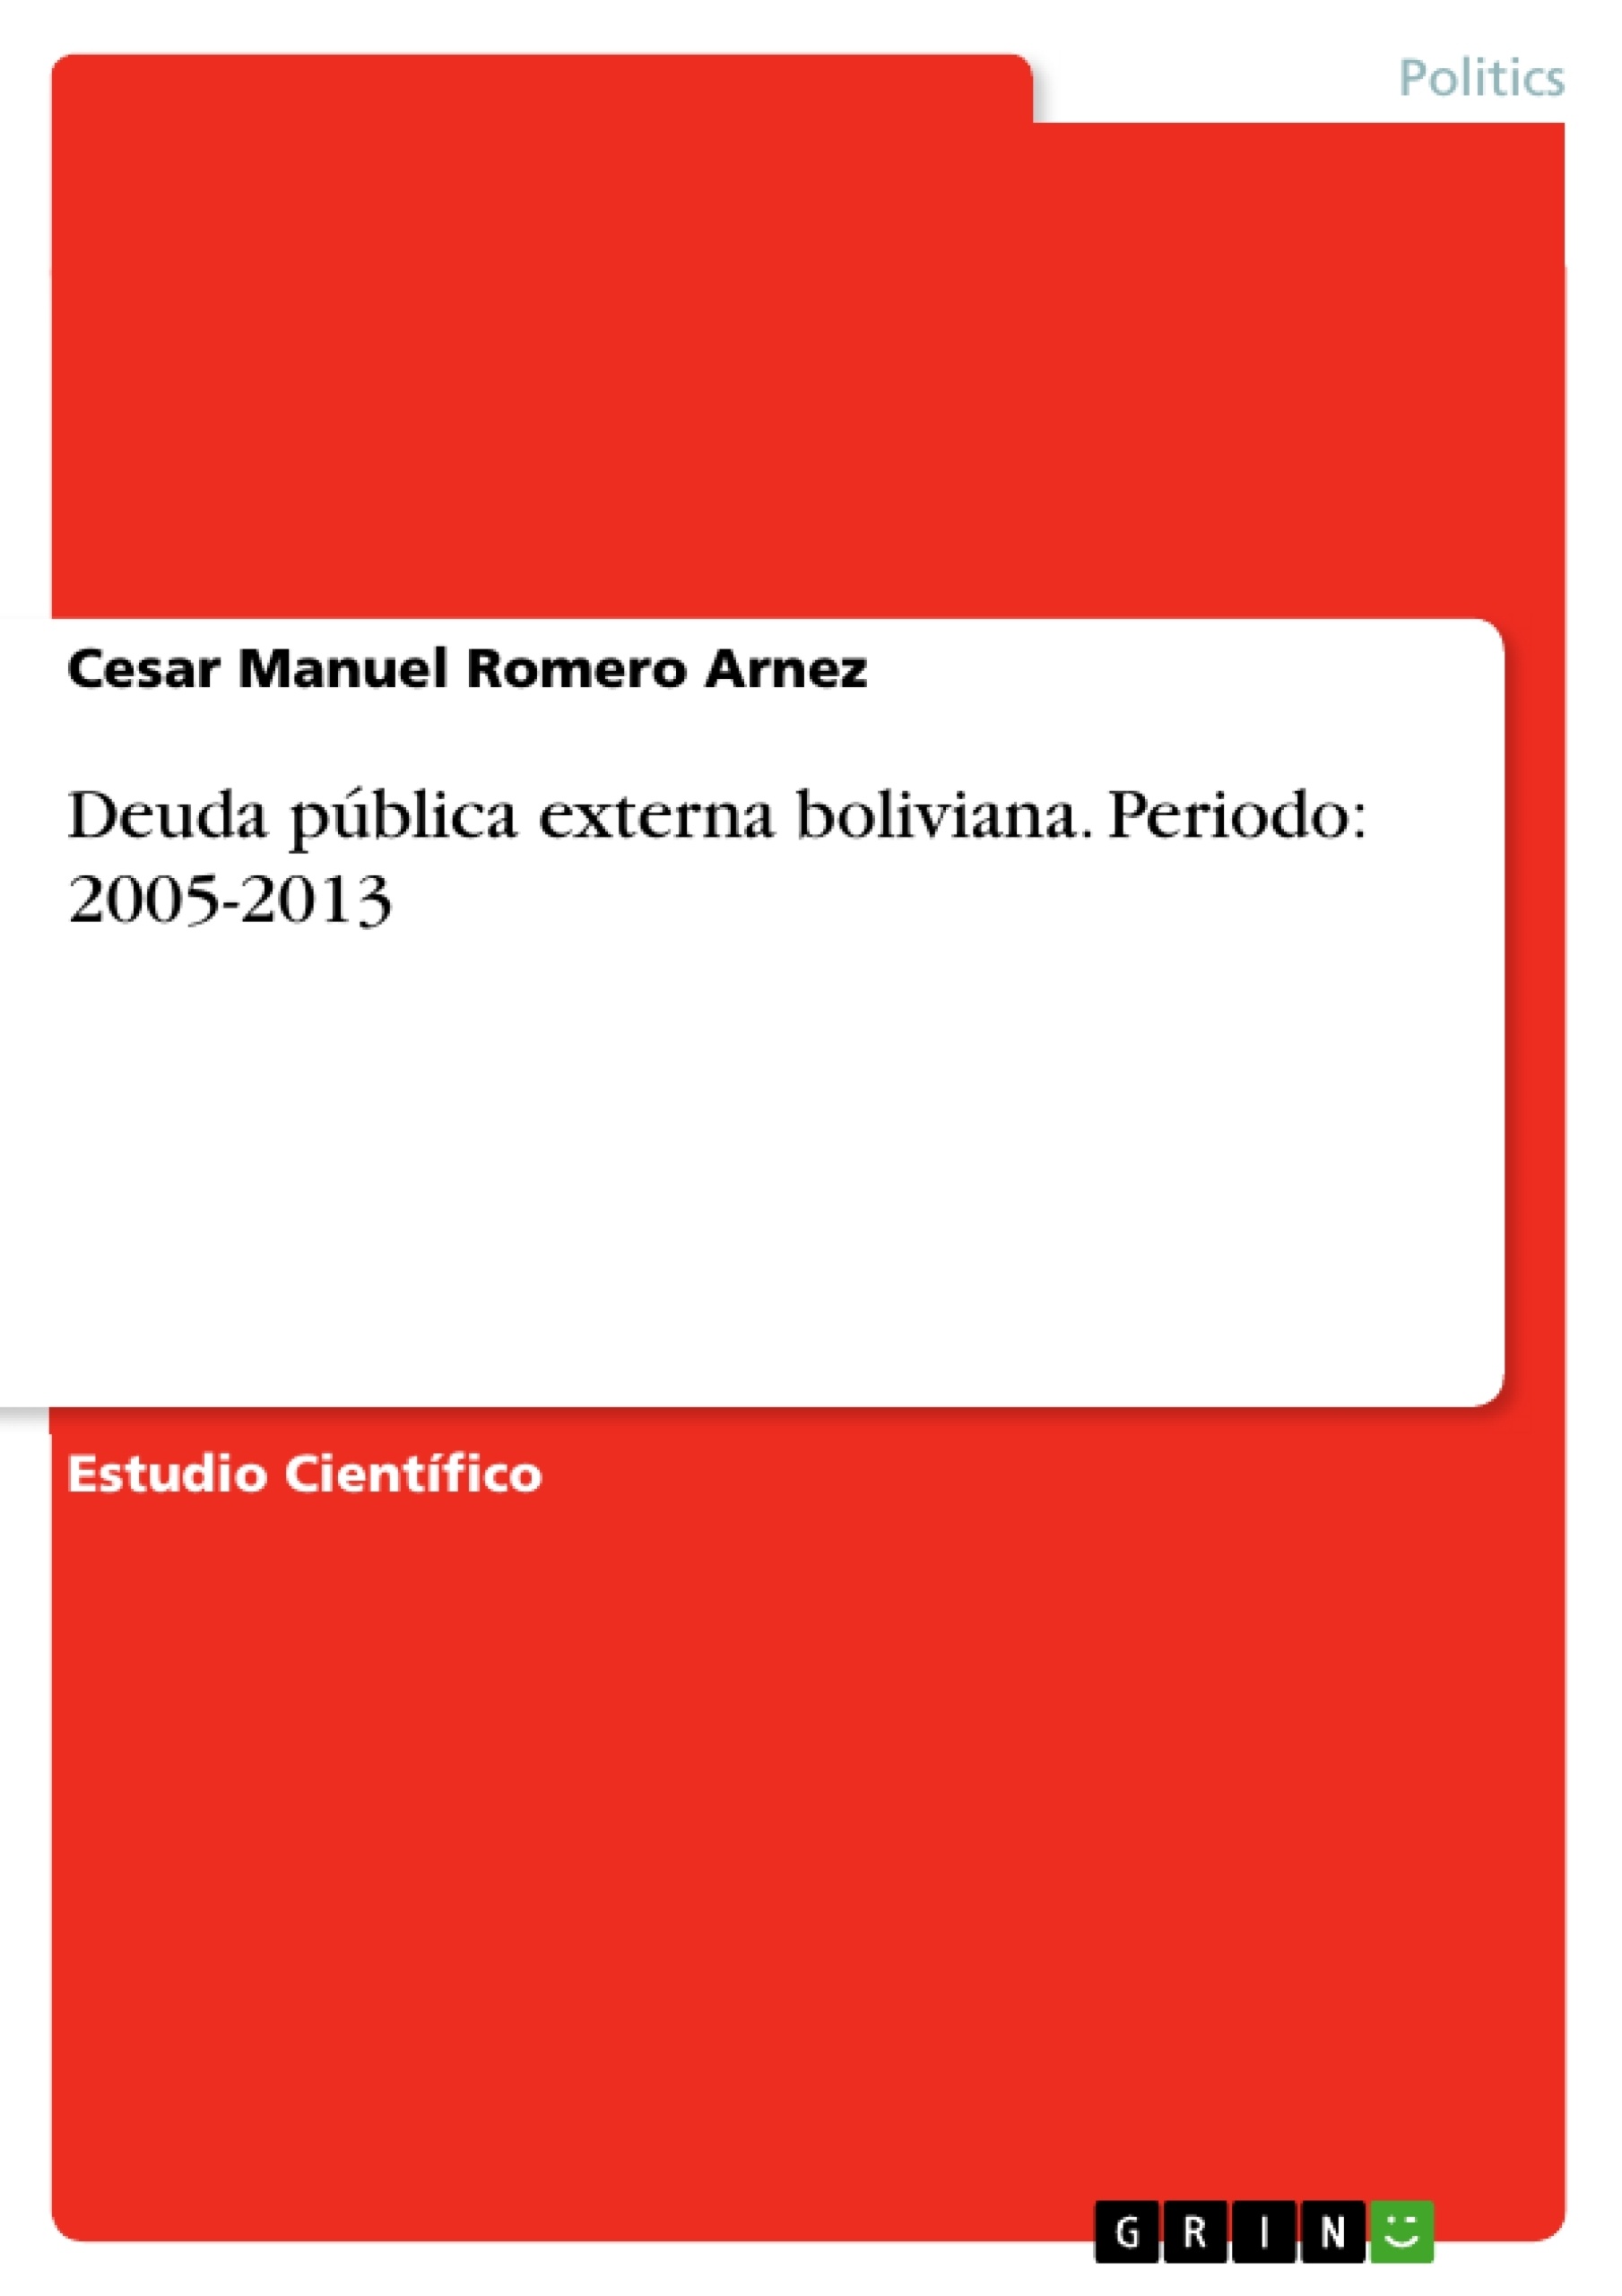 Titre: Deuda pública externa boliviana. Periodo: 2005-2013